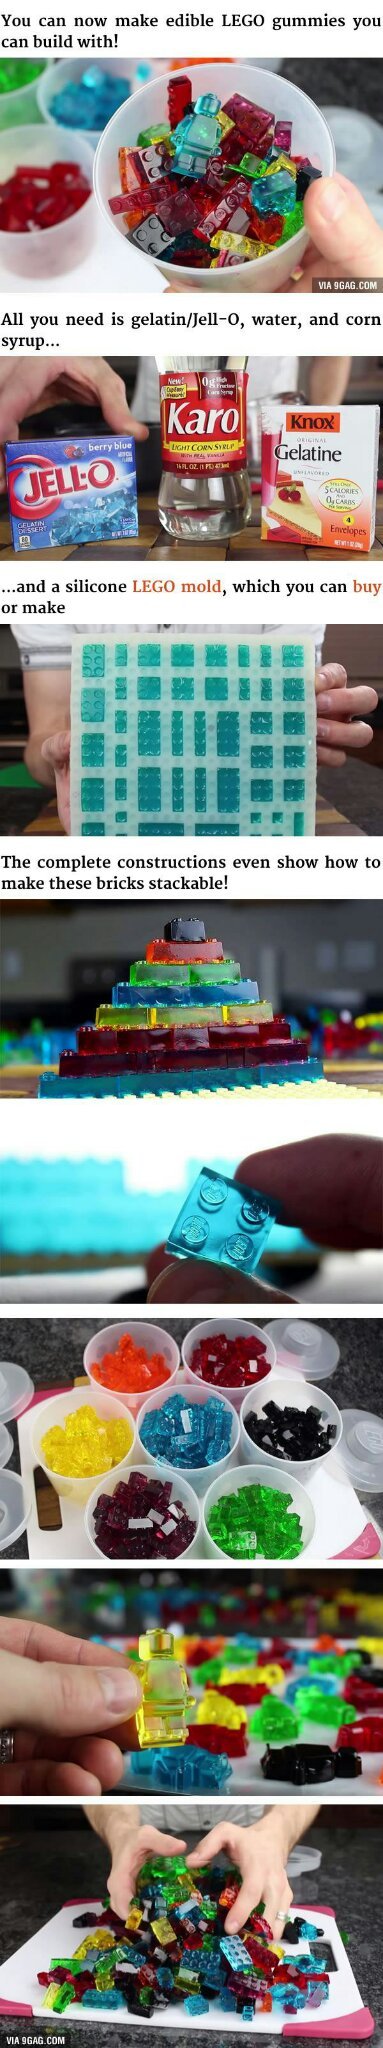 How ro make Lego Gummy Candy - meme